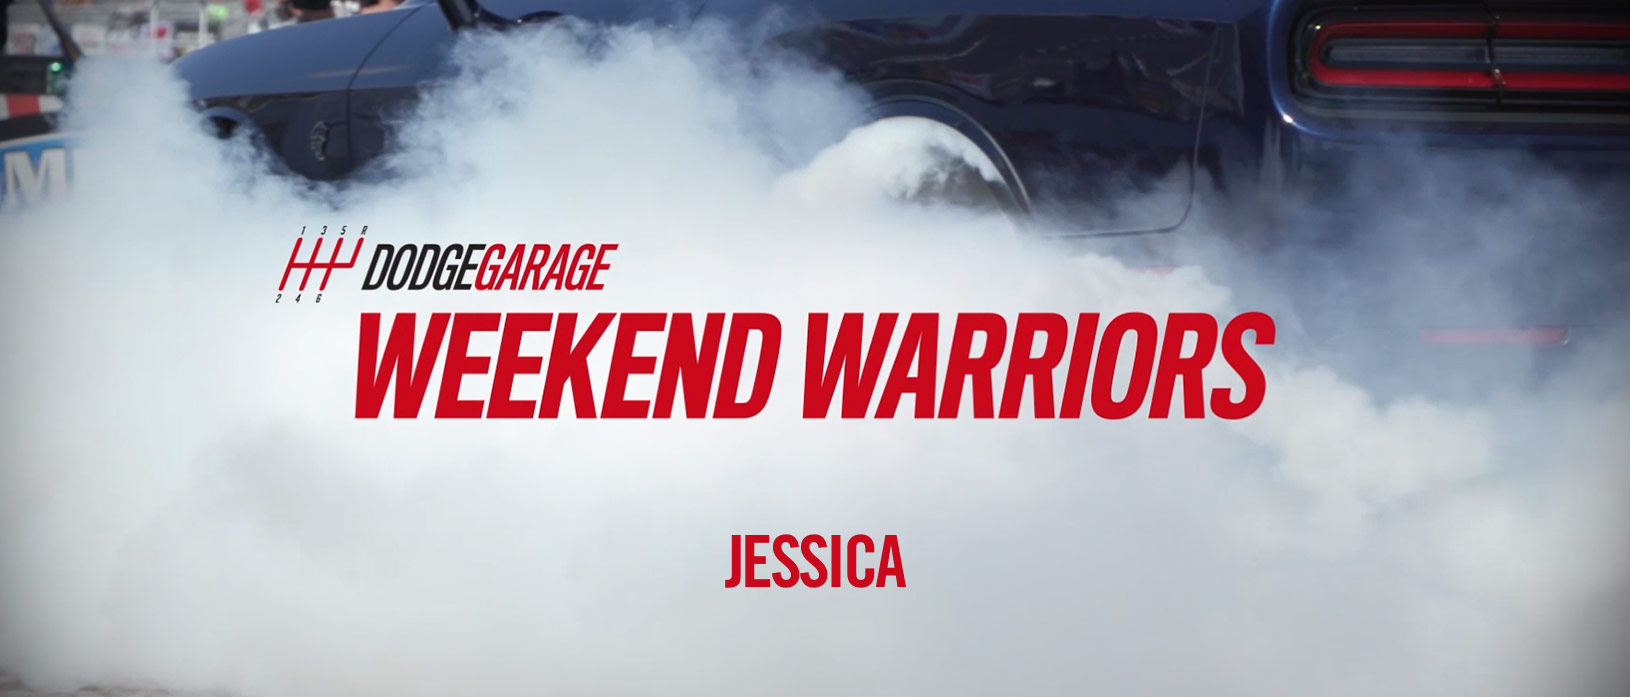 Weekend Warriors Jessica